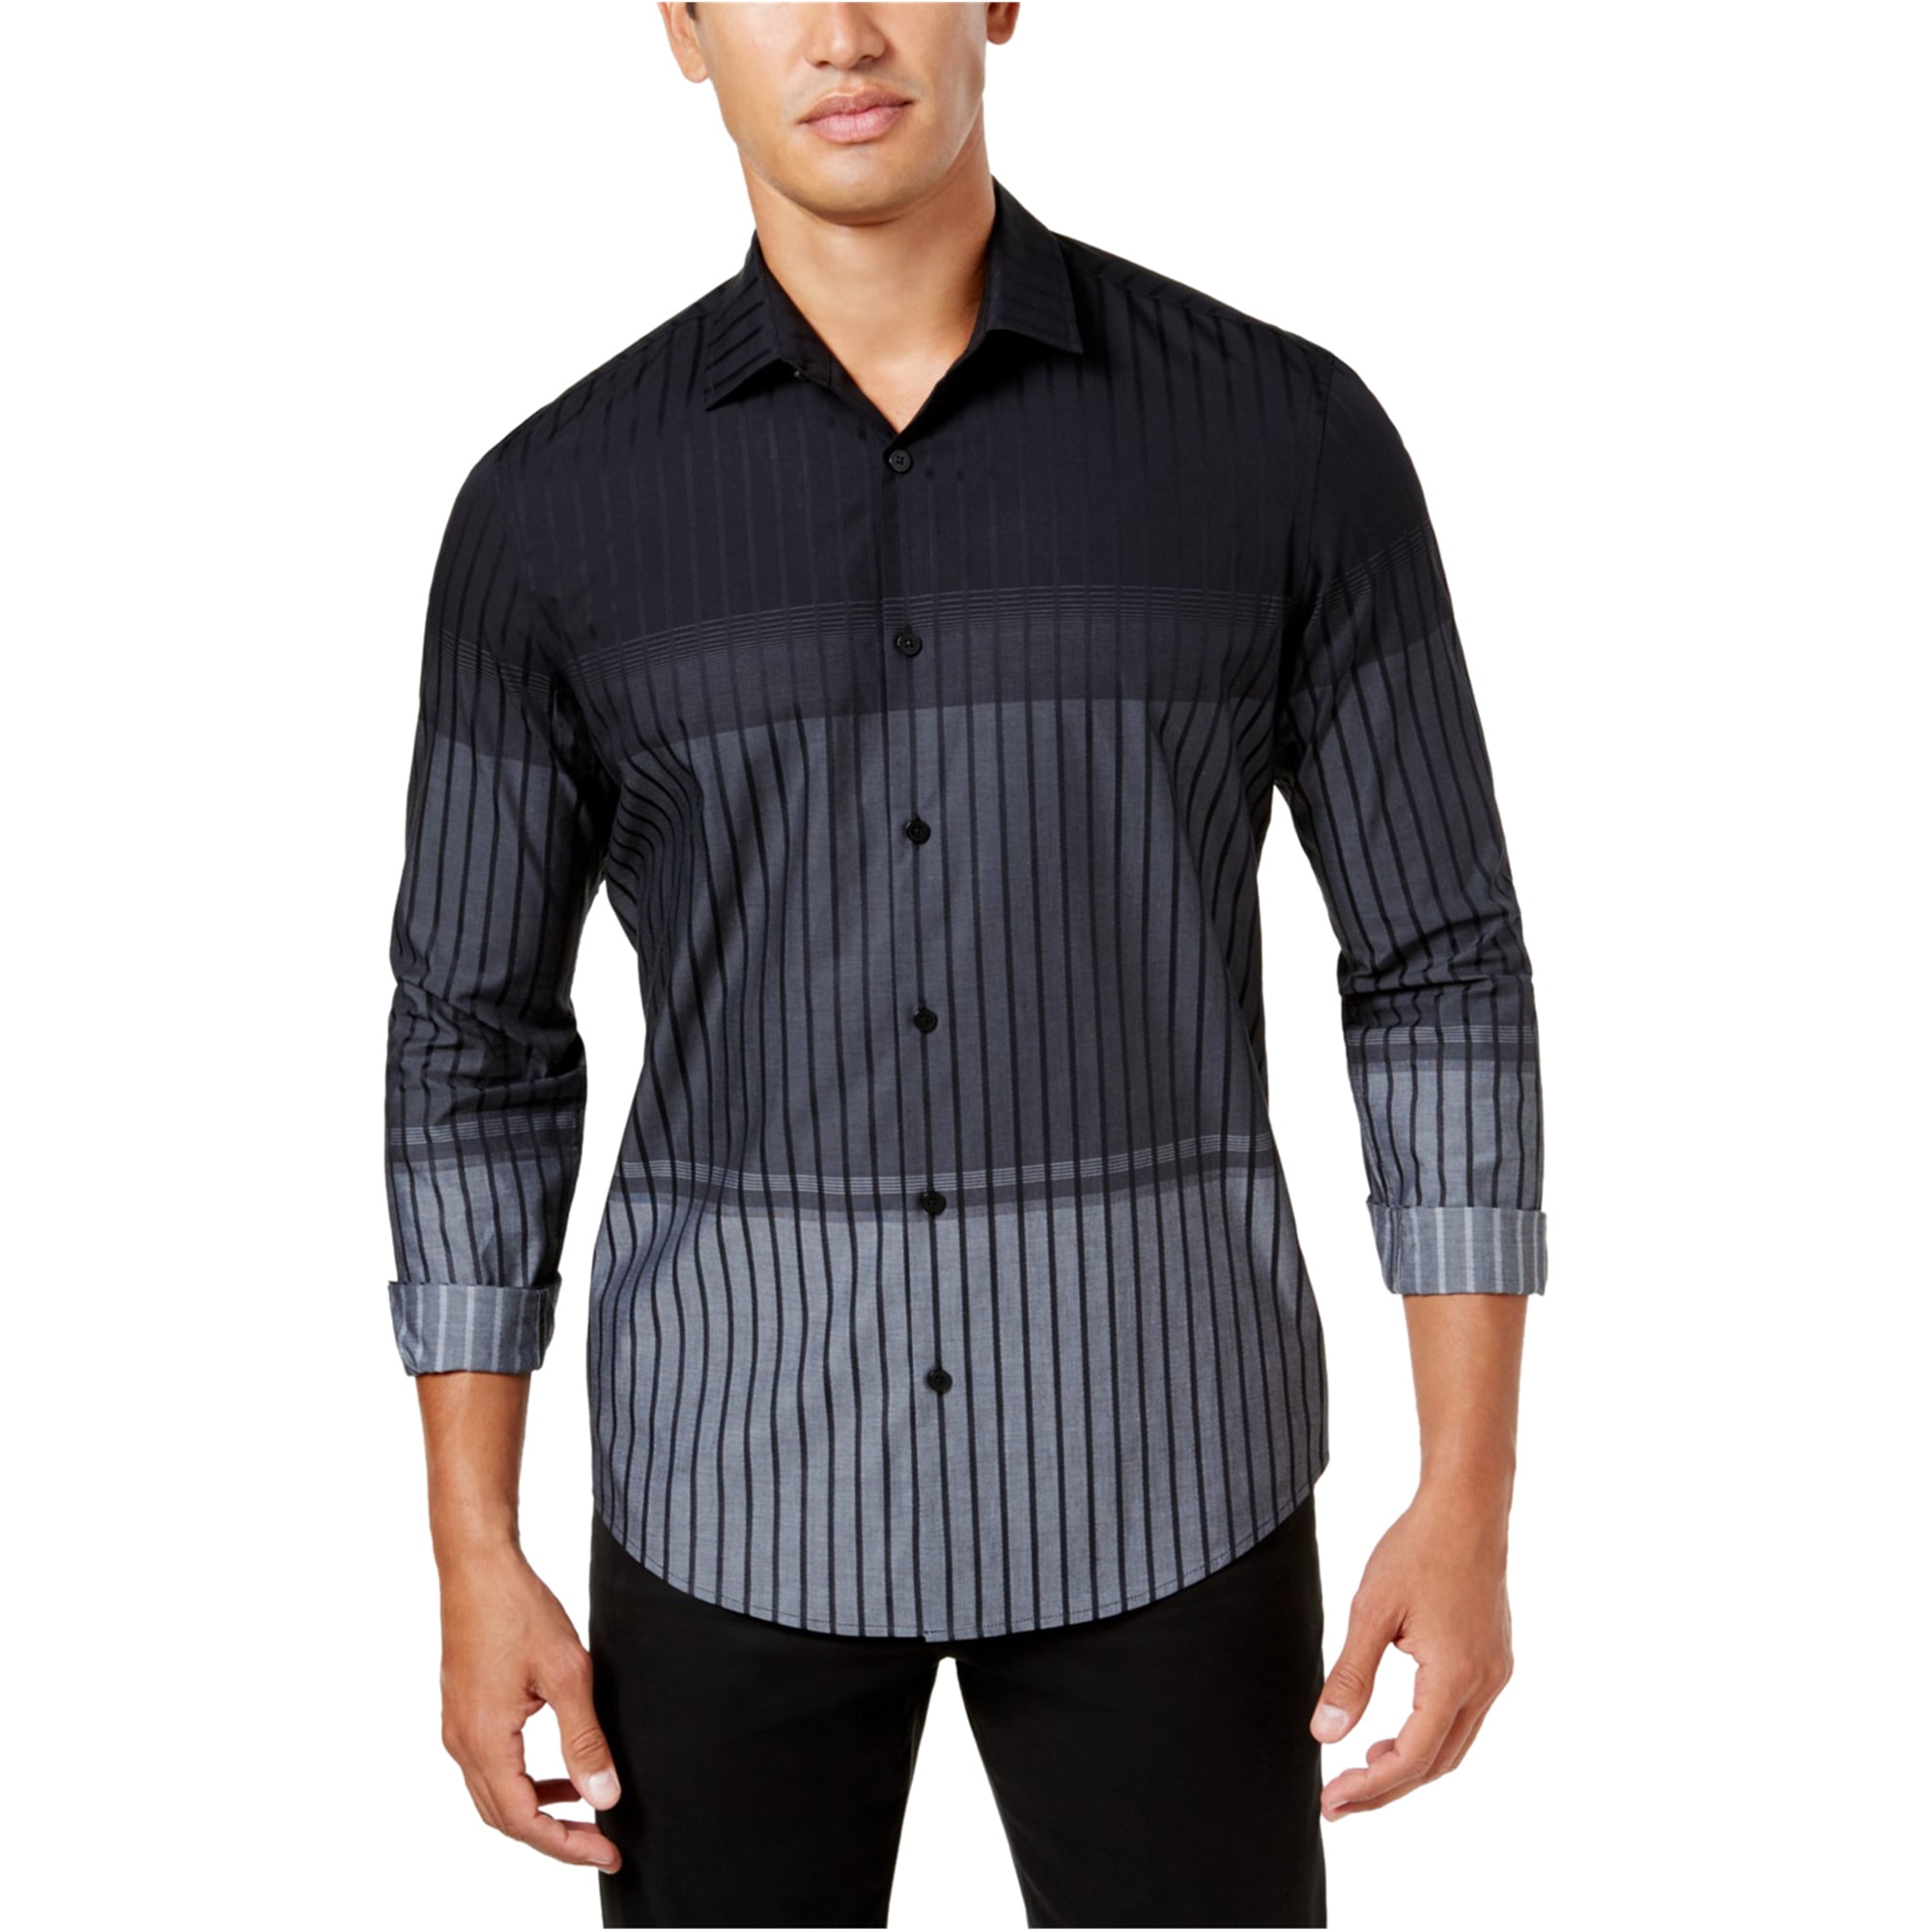 alfani mens ombre stripe button up shirt - Walmart.com - Walmart.com